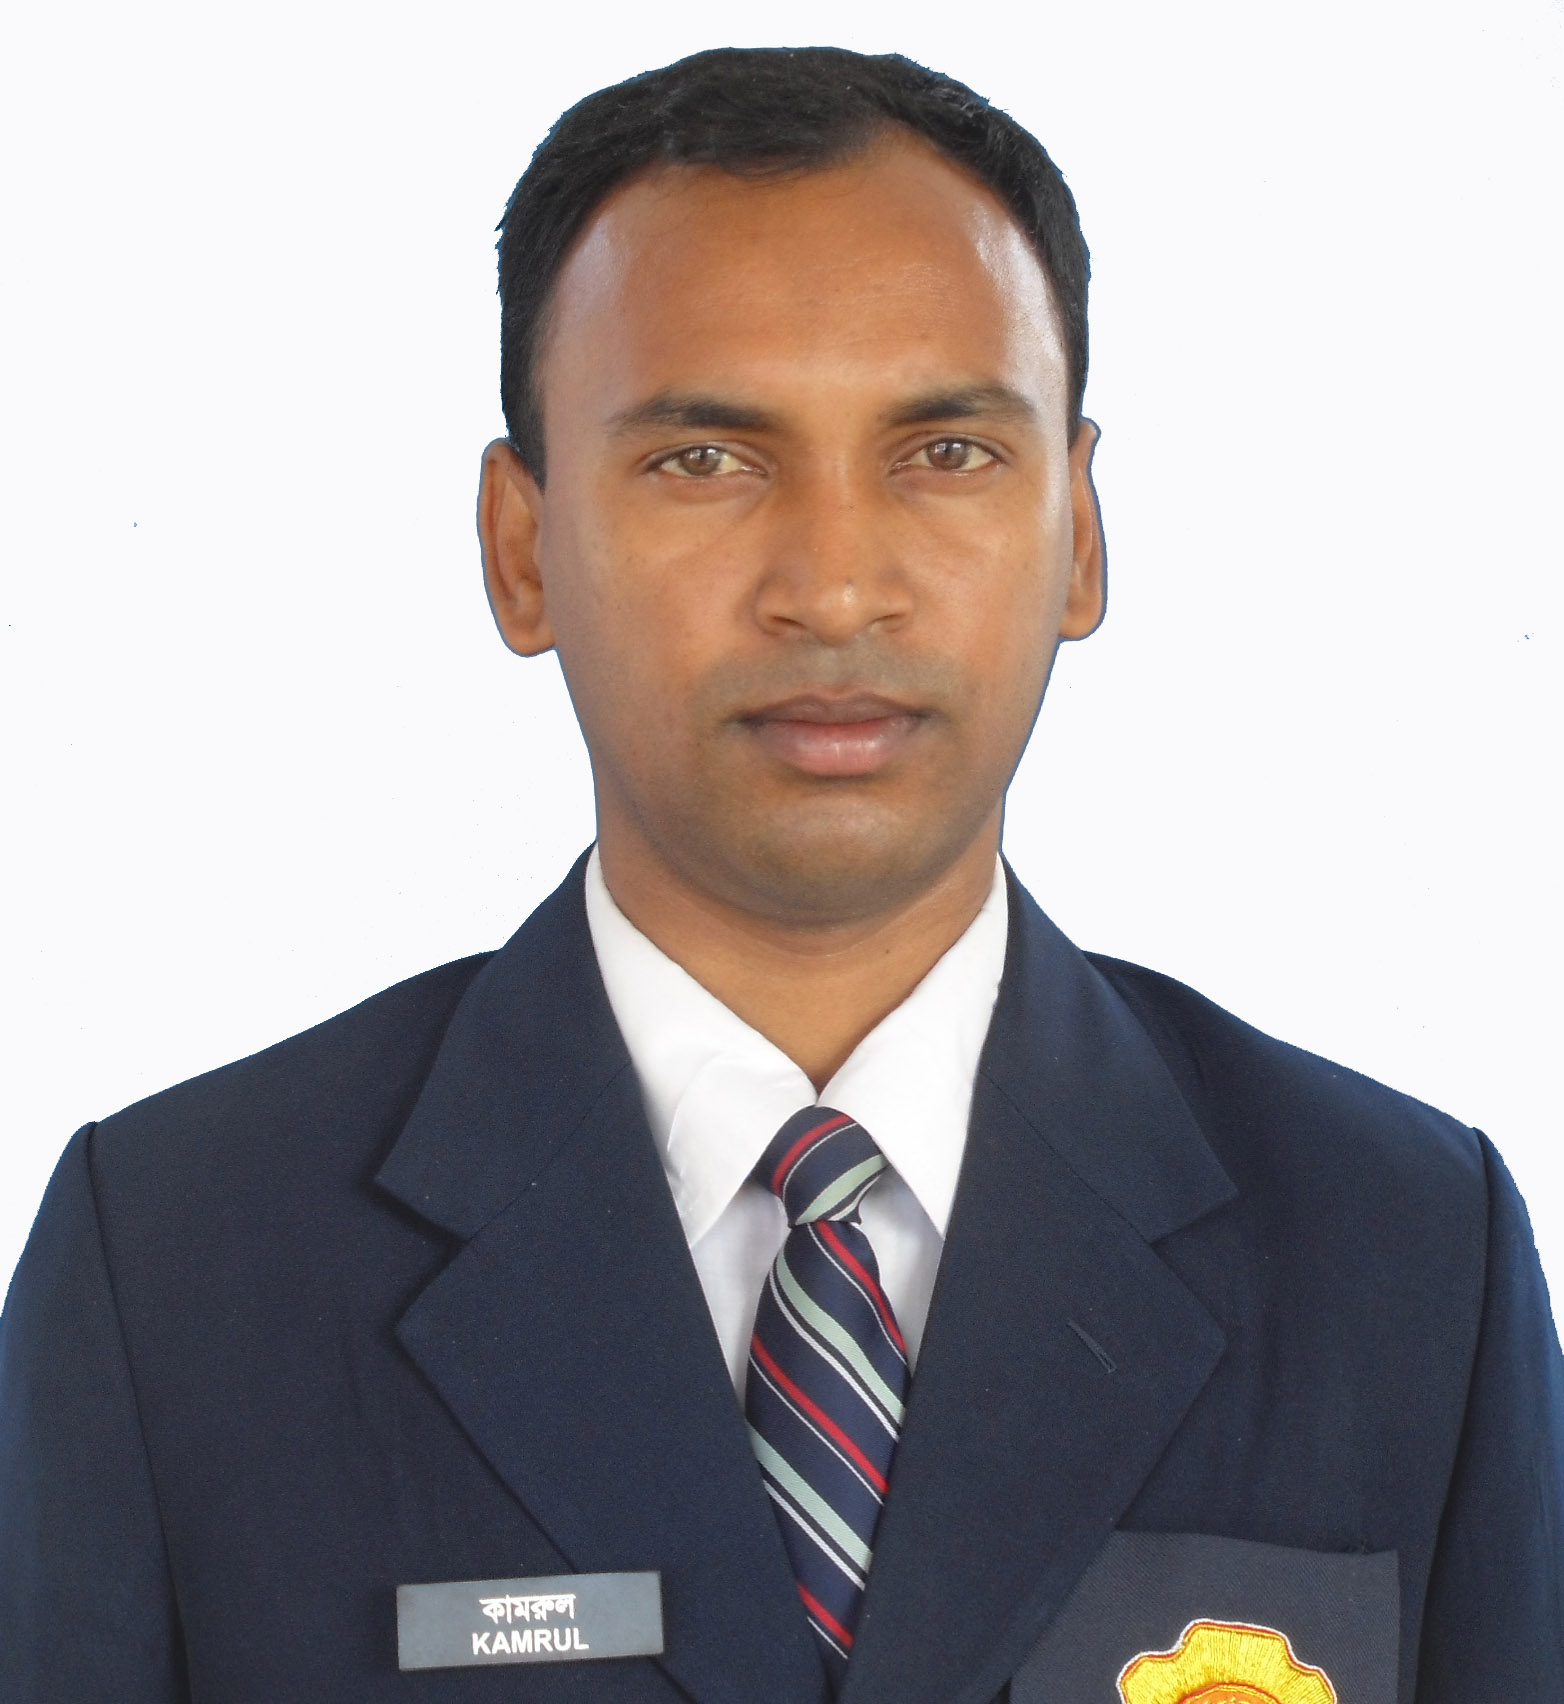 A. K. M. Kamrul Hasan